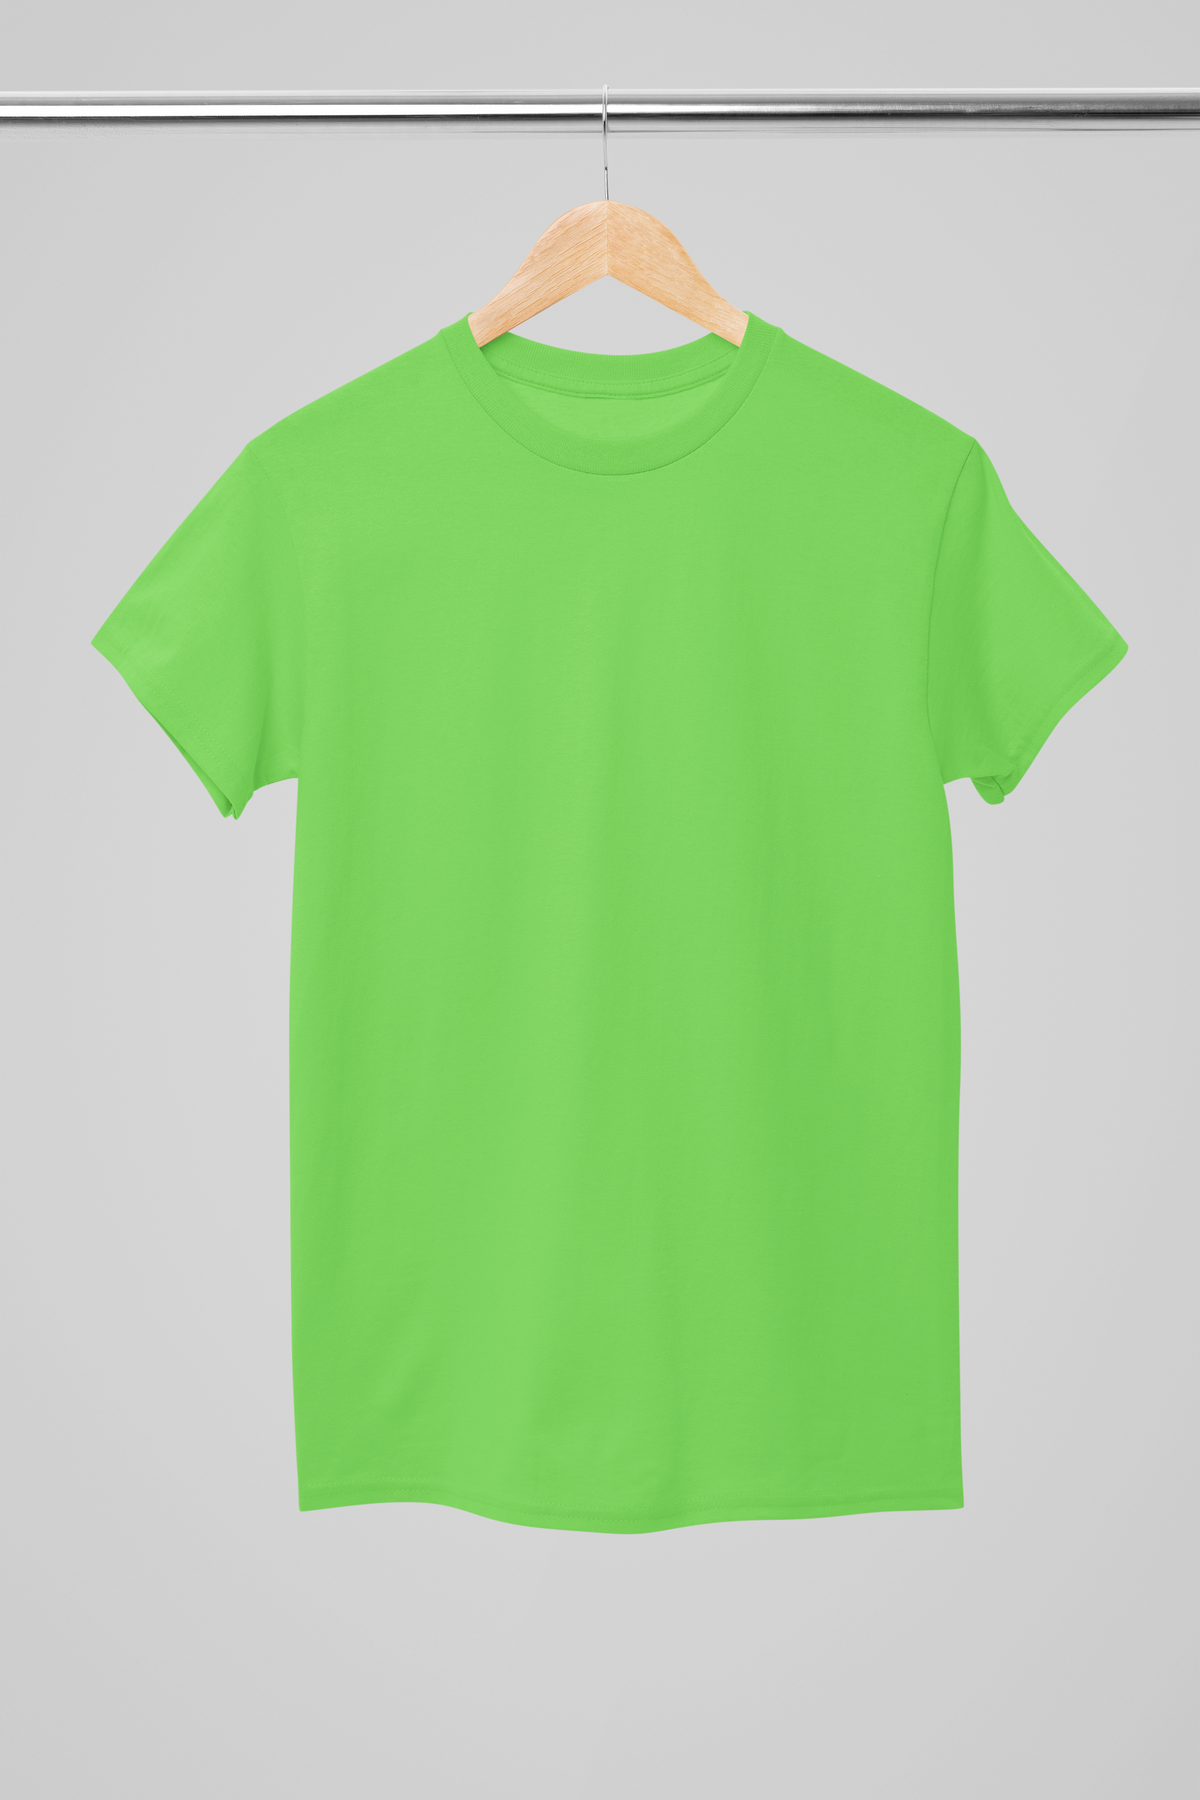 Plain Liril Green Unisex T-shirt